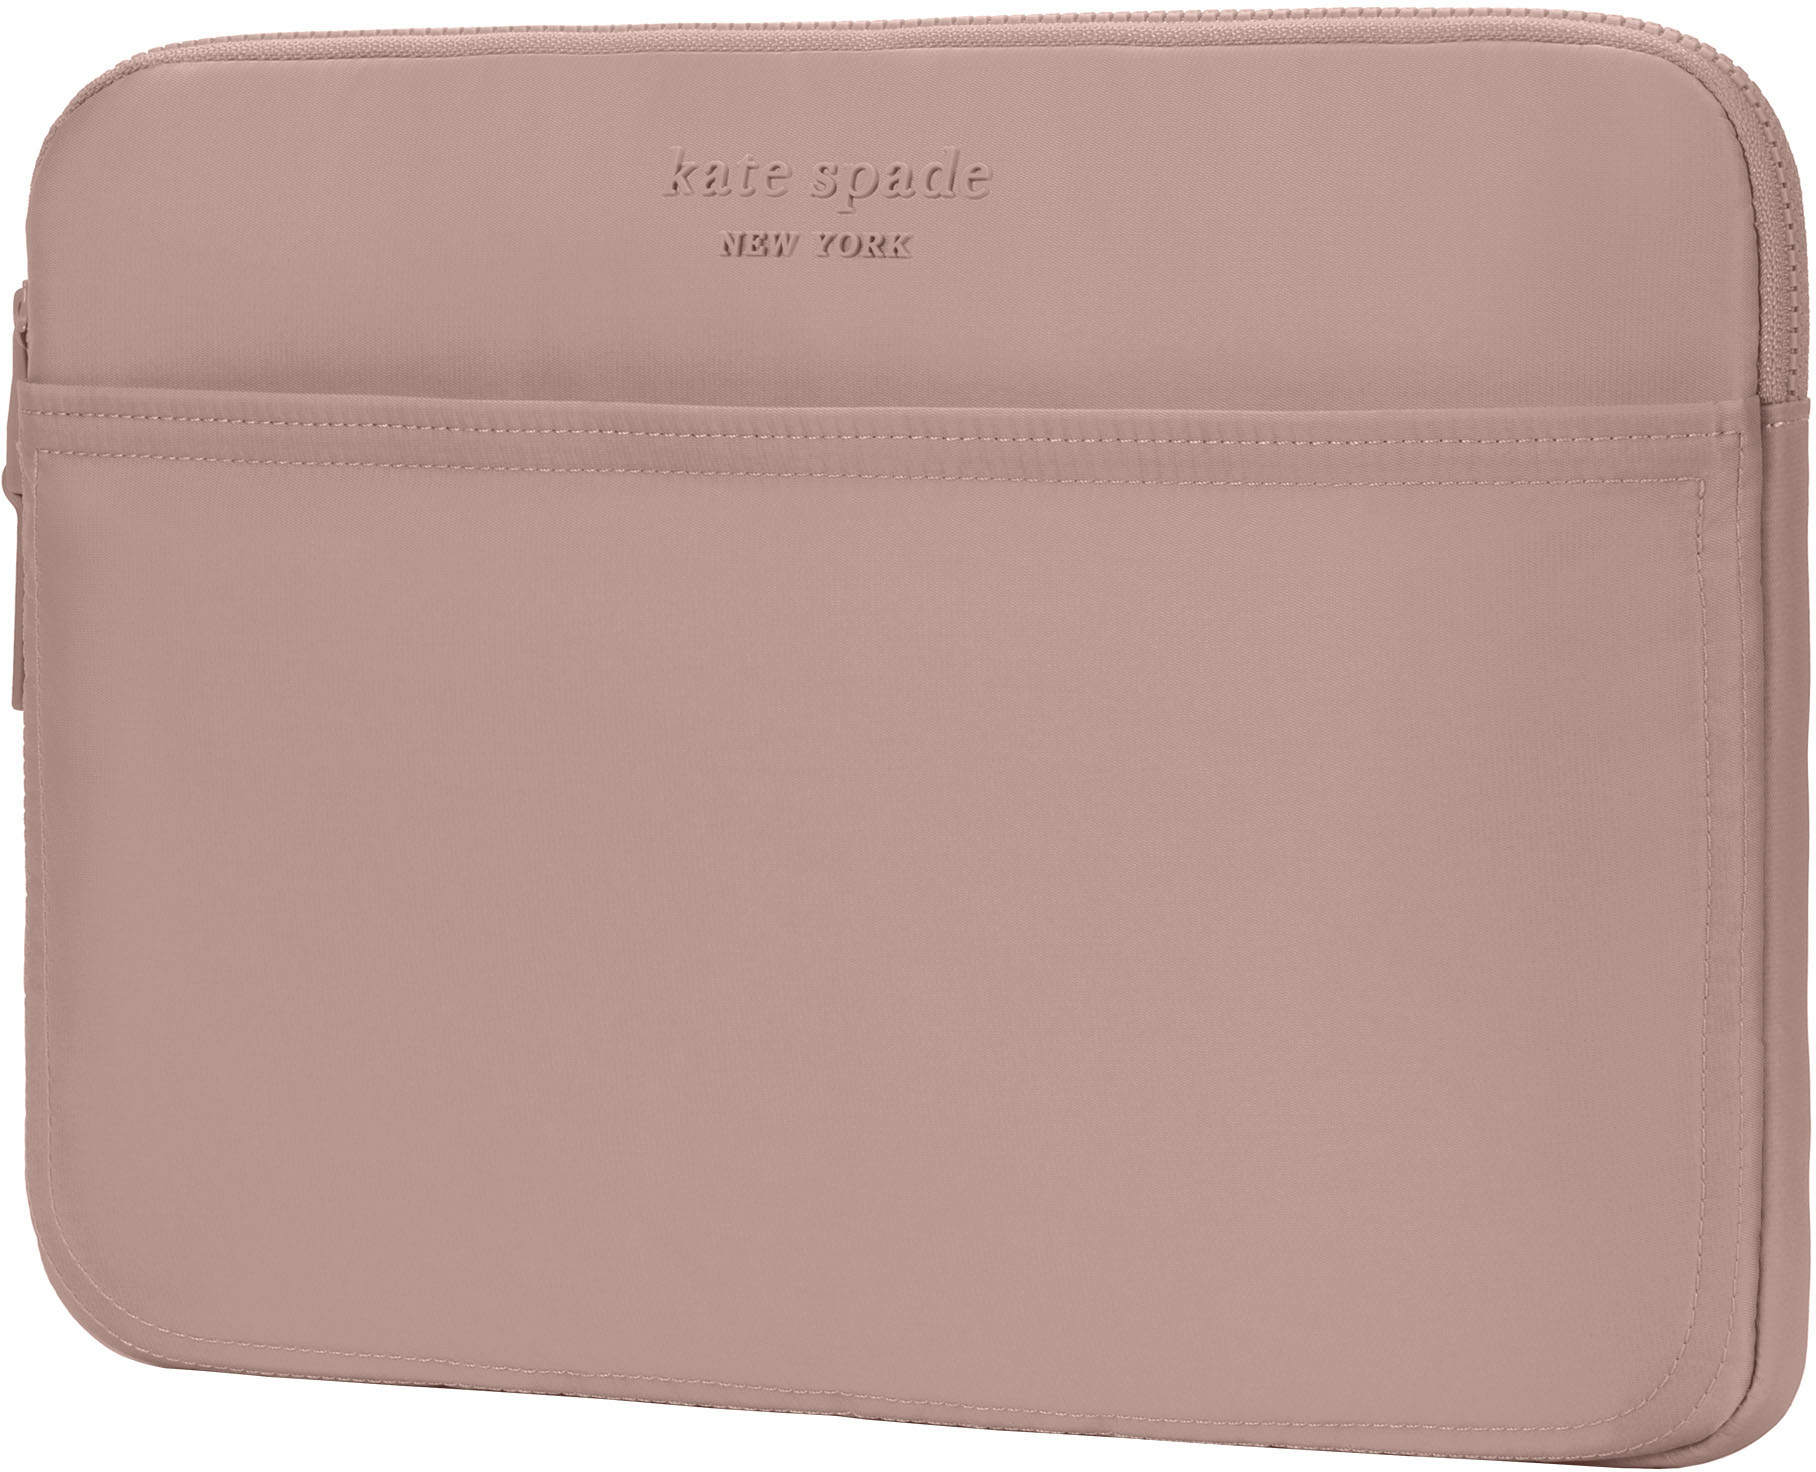 kate spade new york Laptop Sleeve for 15-16 Pink KSMB-025-MADR - Best Buy